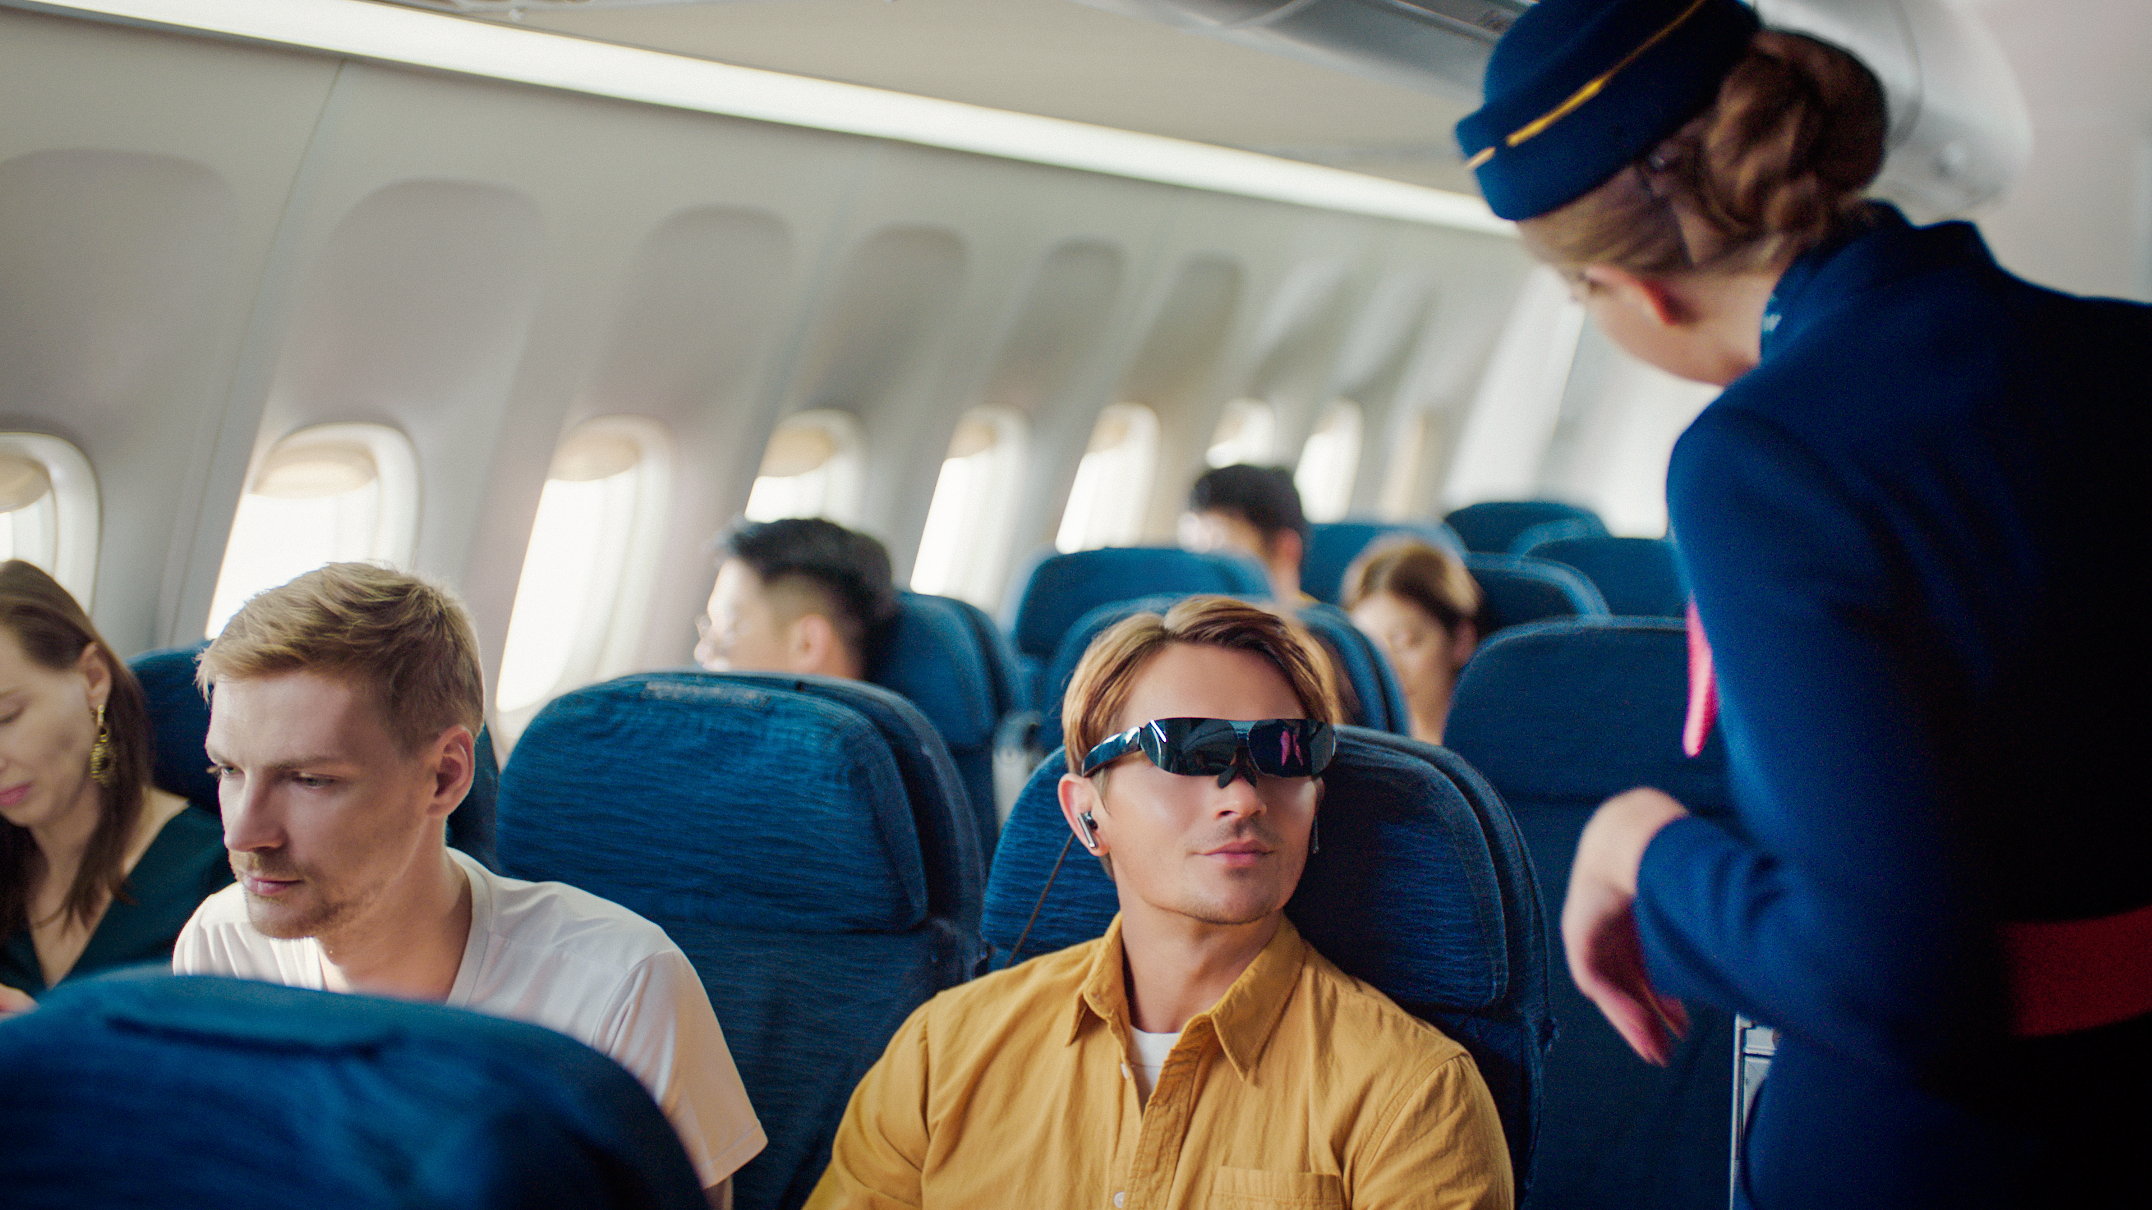 TCL NXTWEAR G smart glasses on a plane